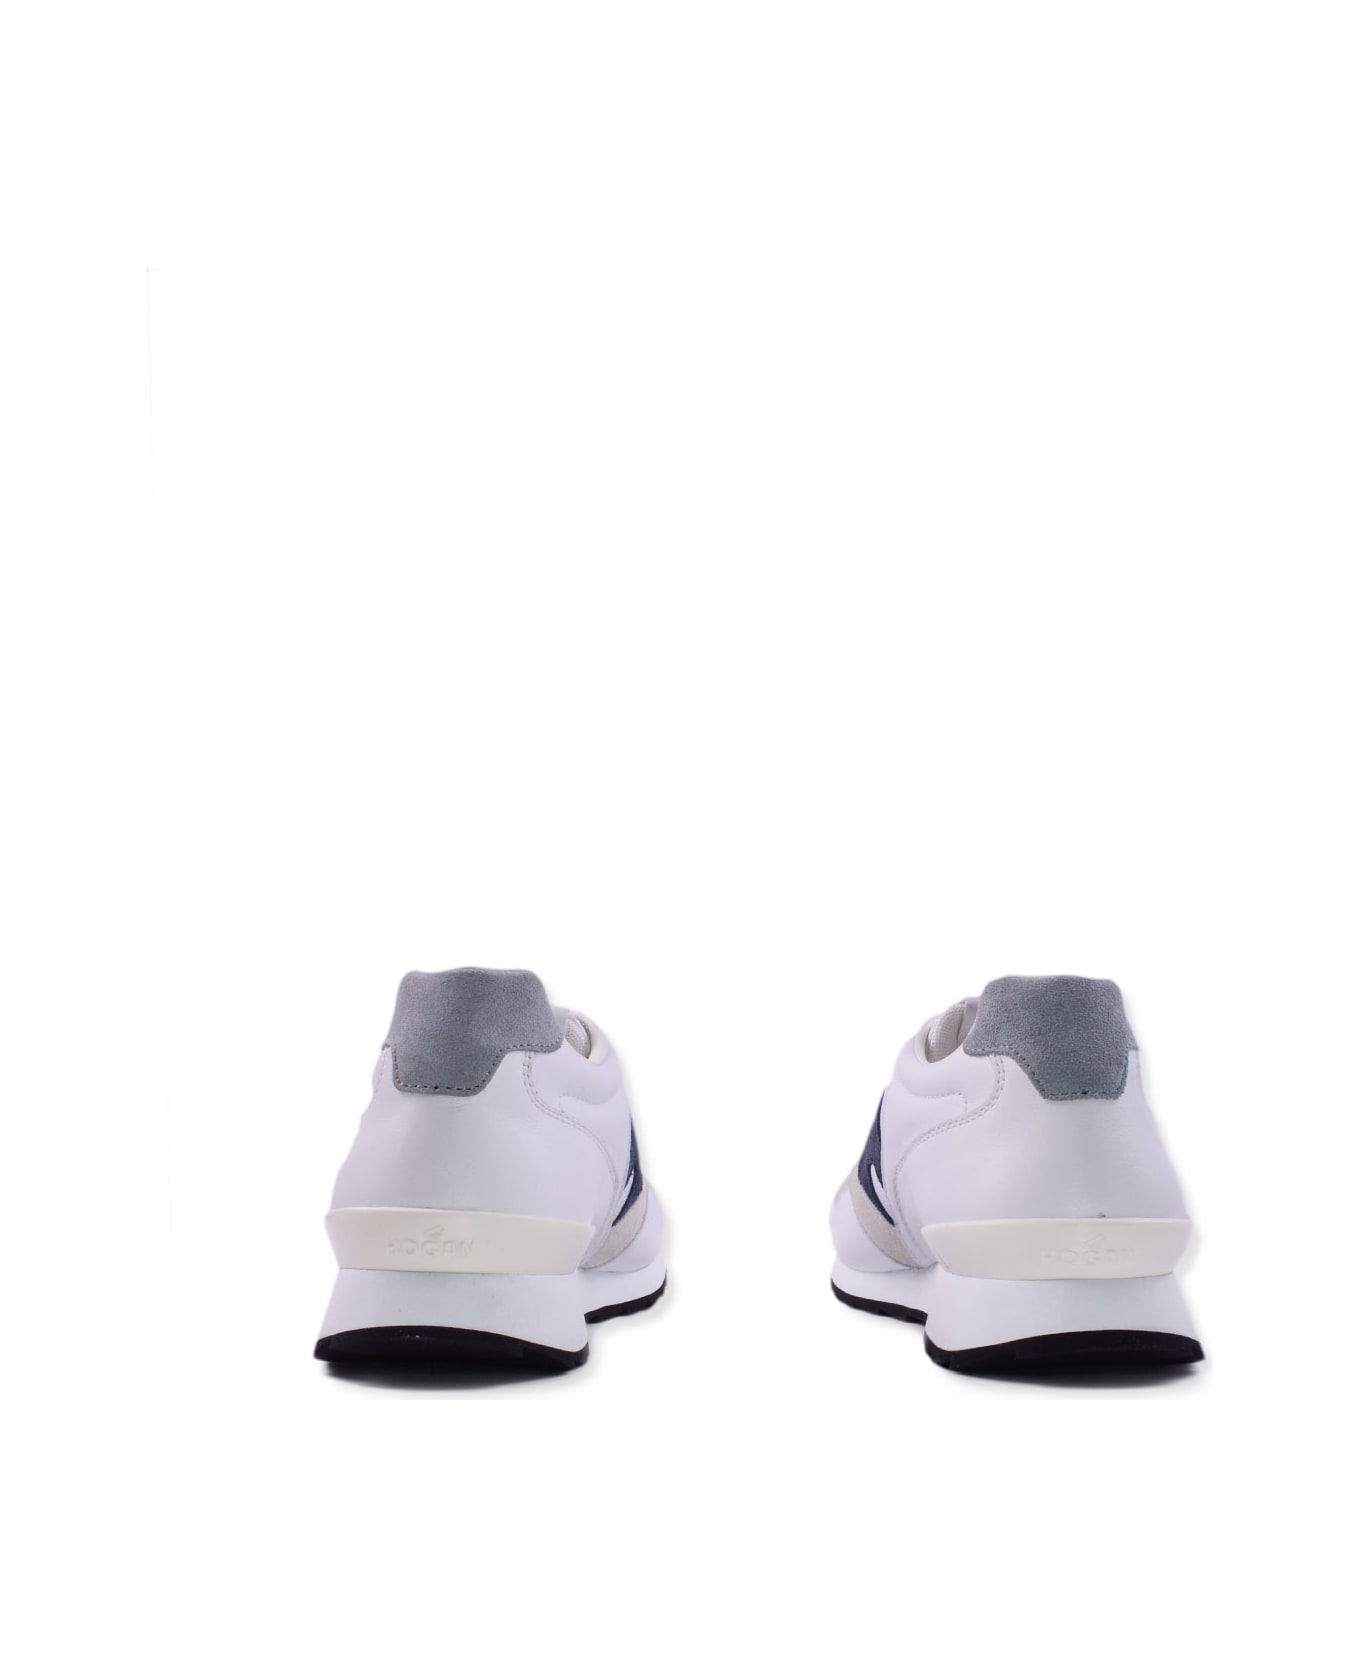 Hogan R261 Sneakers - White